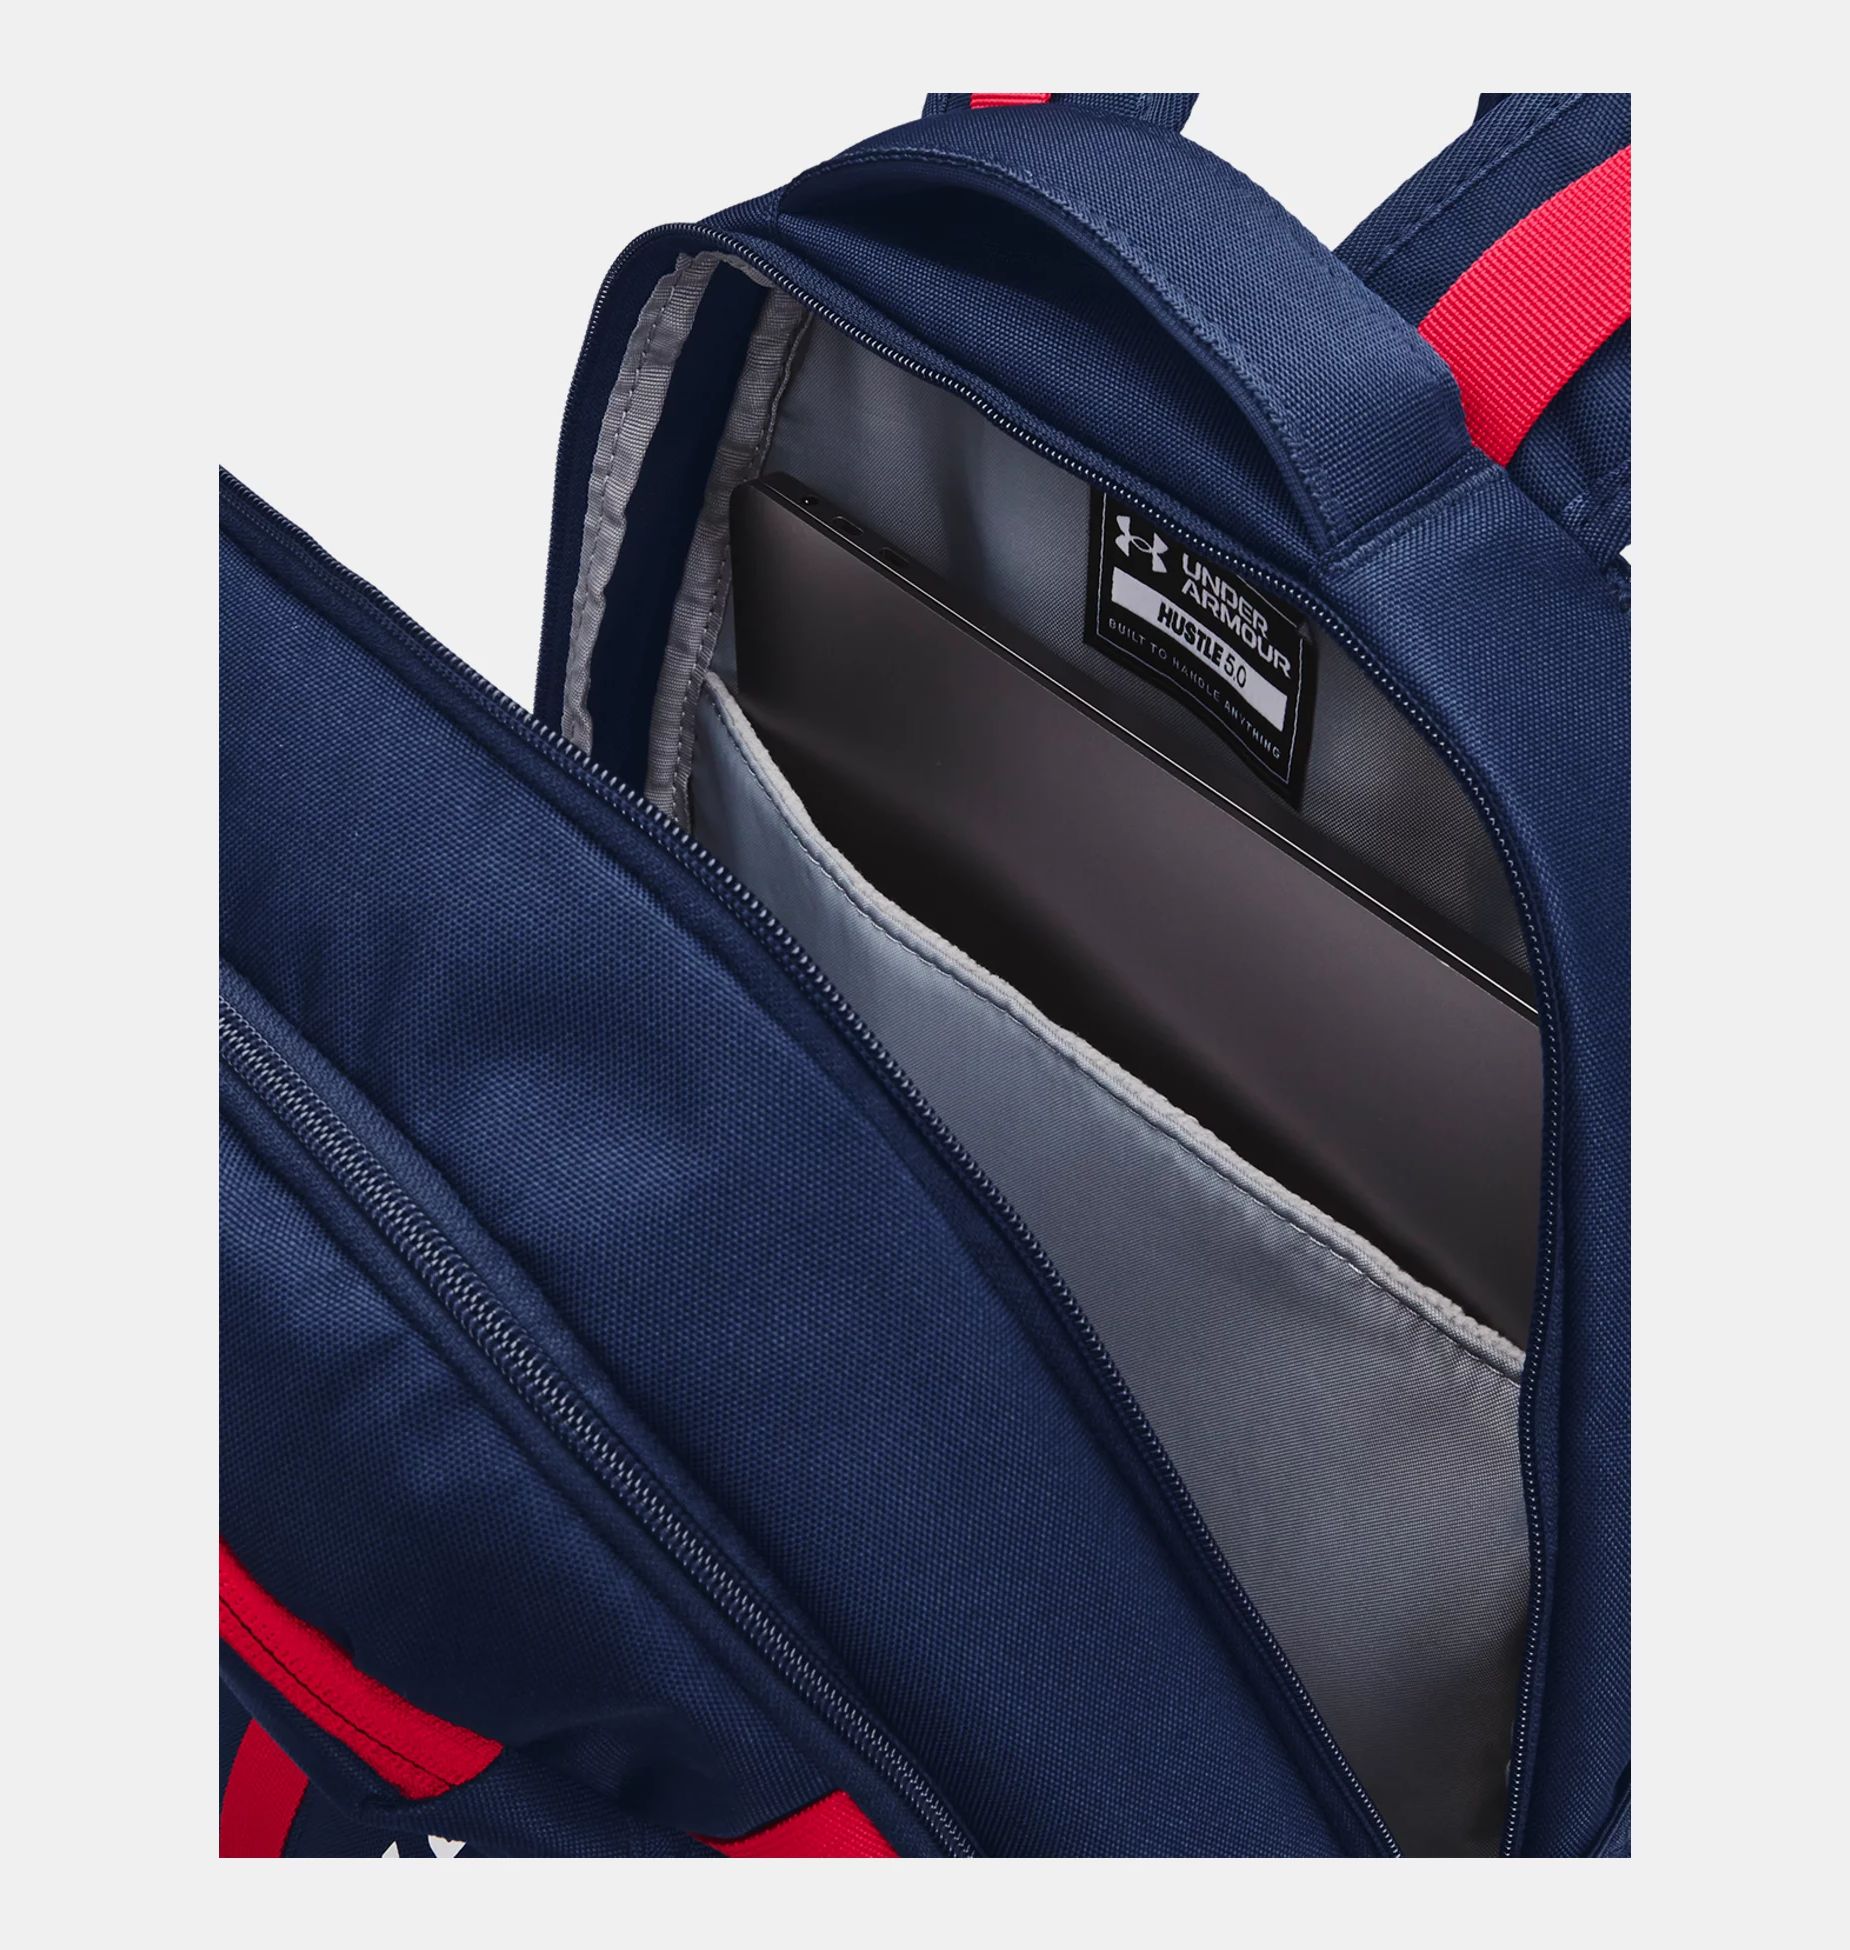 Bagpacks -  under armour Hustle 5.0 Backpack